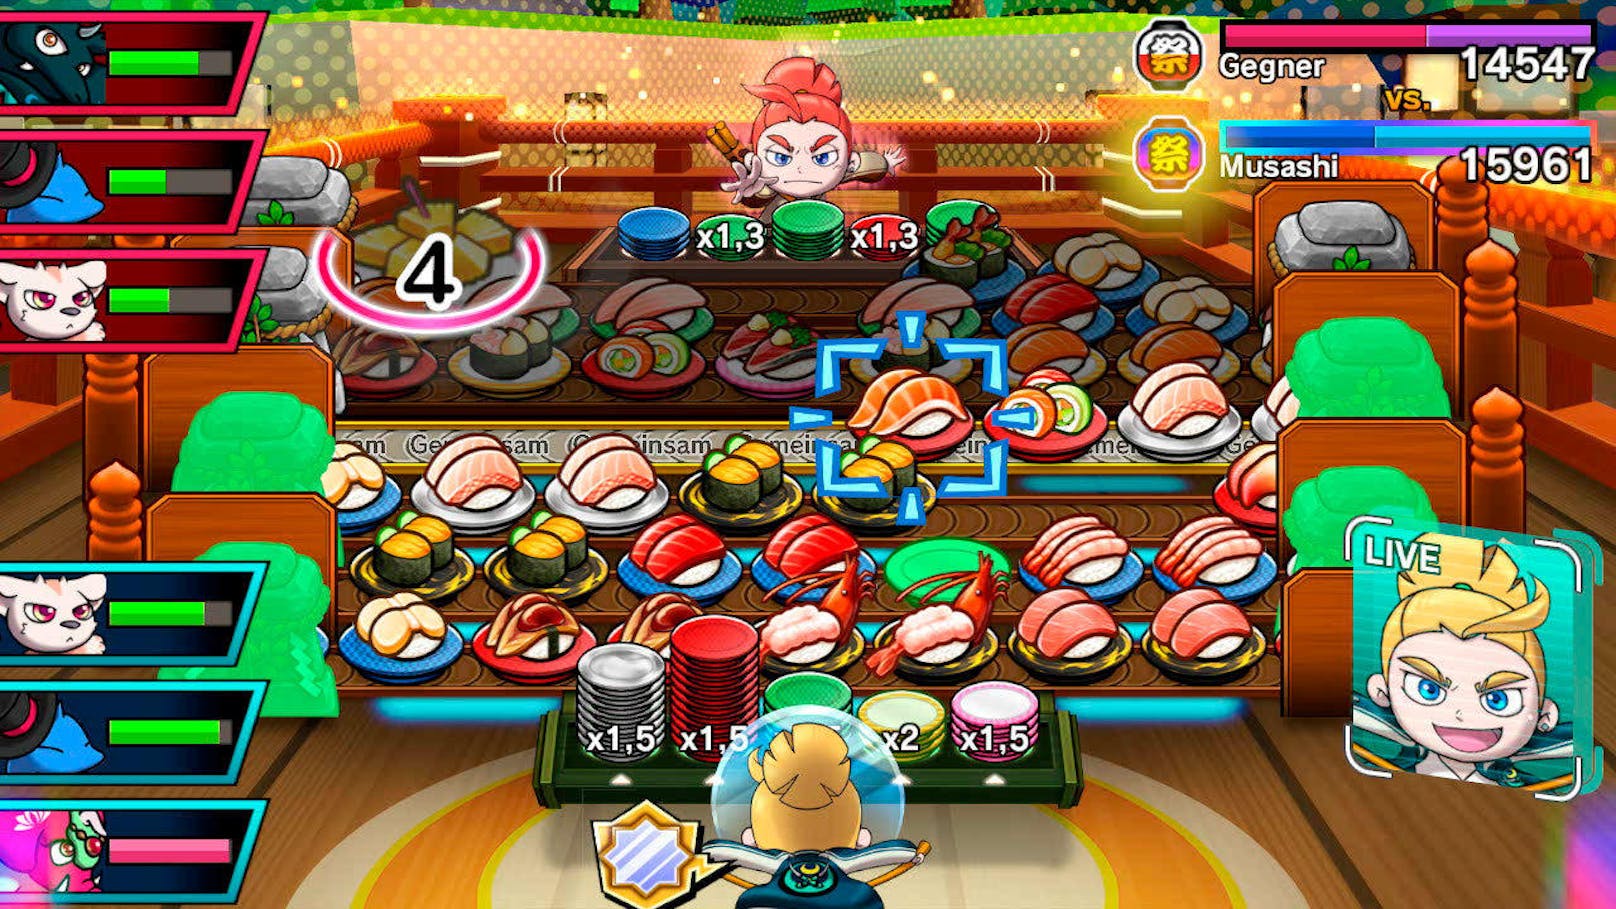  <a href="https://www.heute.at/digital/games/story/Sushi-Striker--The-Way-of-Sushido-Test-Review-Nintendo-Switch-3DS-Mit-Sushi-gegen-das-boese-Imperium-58202340" target="_blank">Sushi Striker: The Way of Sushido</a>